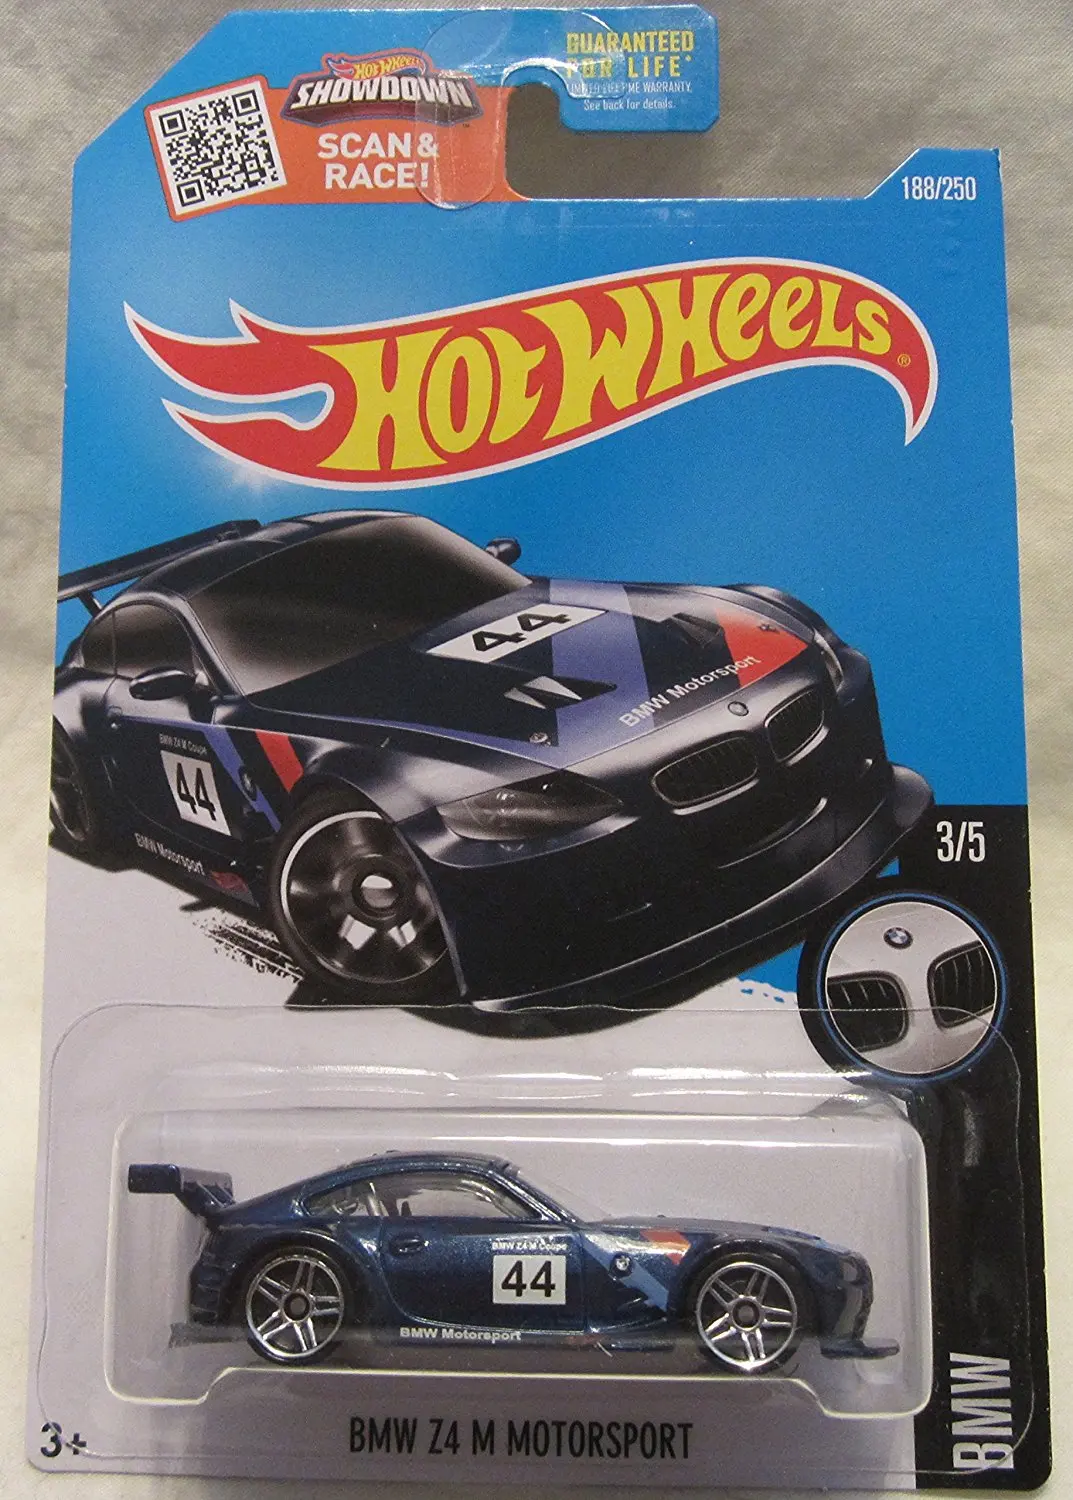 bmw 3 series toy car